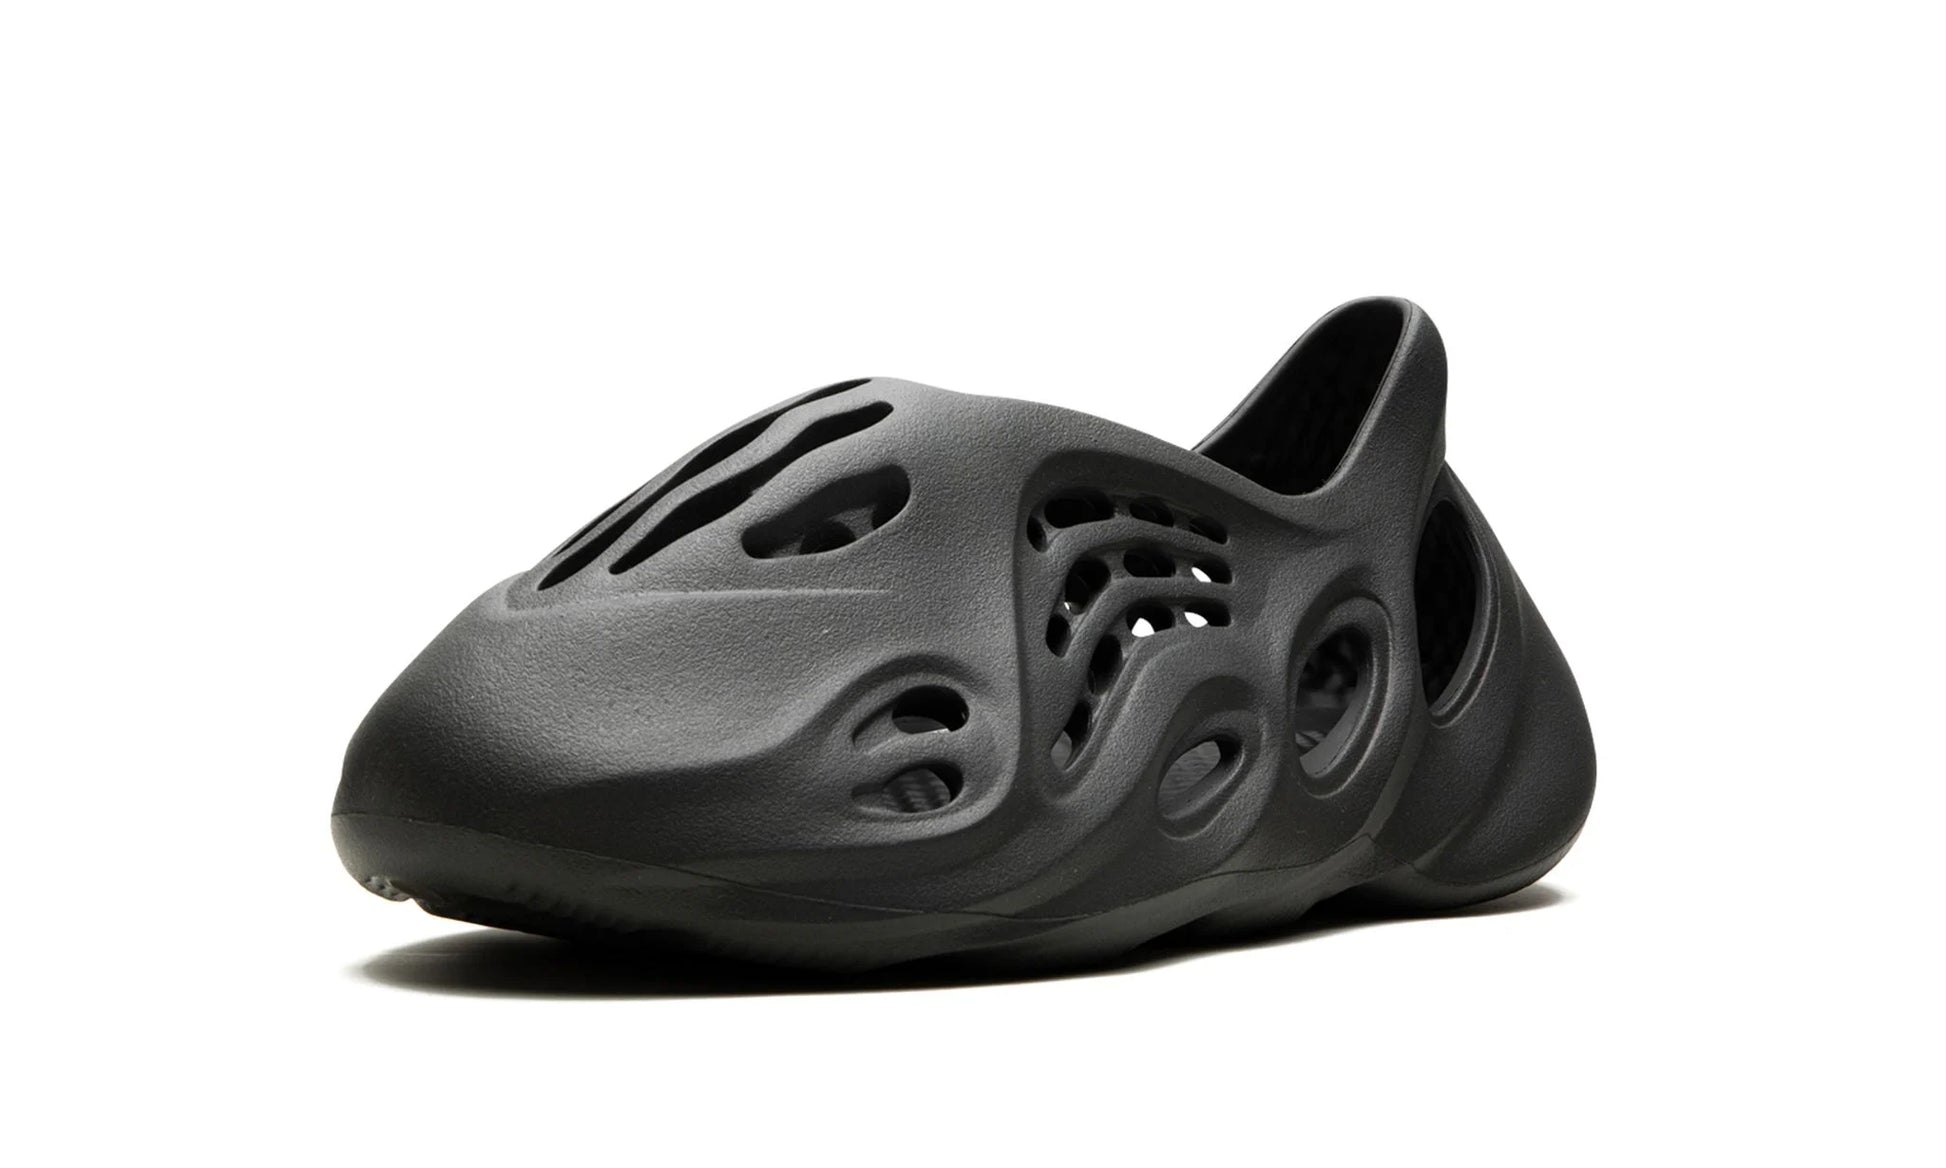 Yeezy Foam Runner Carbon Single Shoe Front View